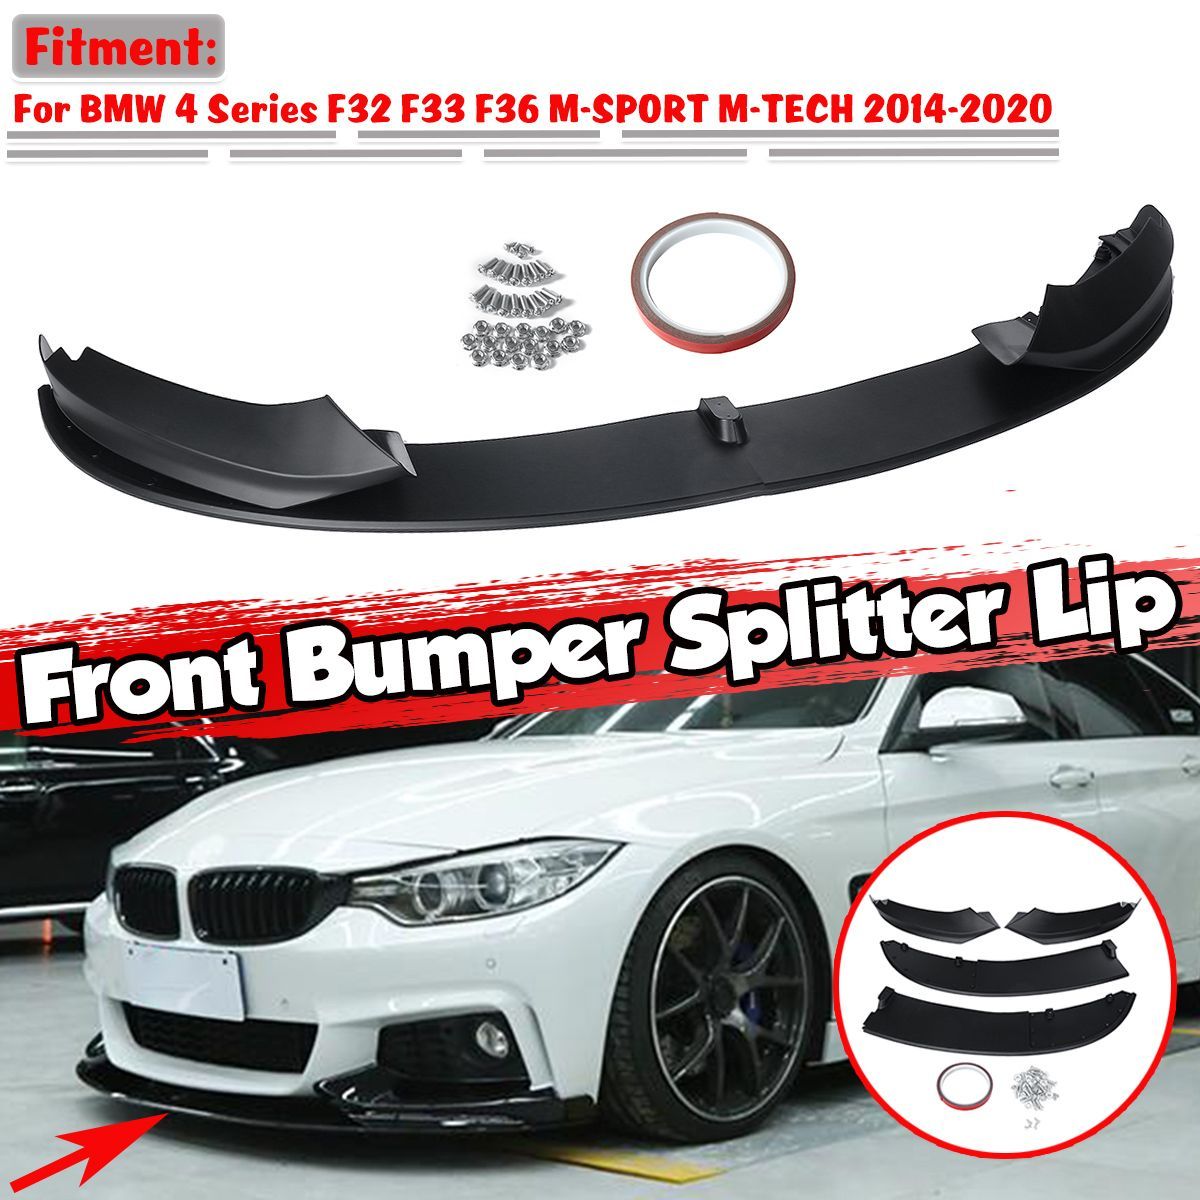 Car-Universal-Carbon-Fiber-Look-Matte-Black-Front-Bumper-Splitter-Lip--Body-Kits-For-BMW-4-Series-1764398